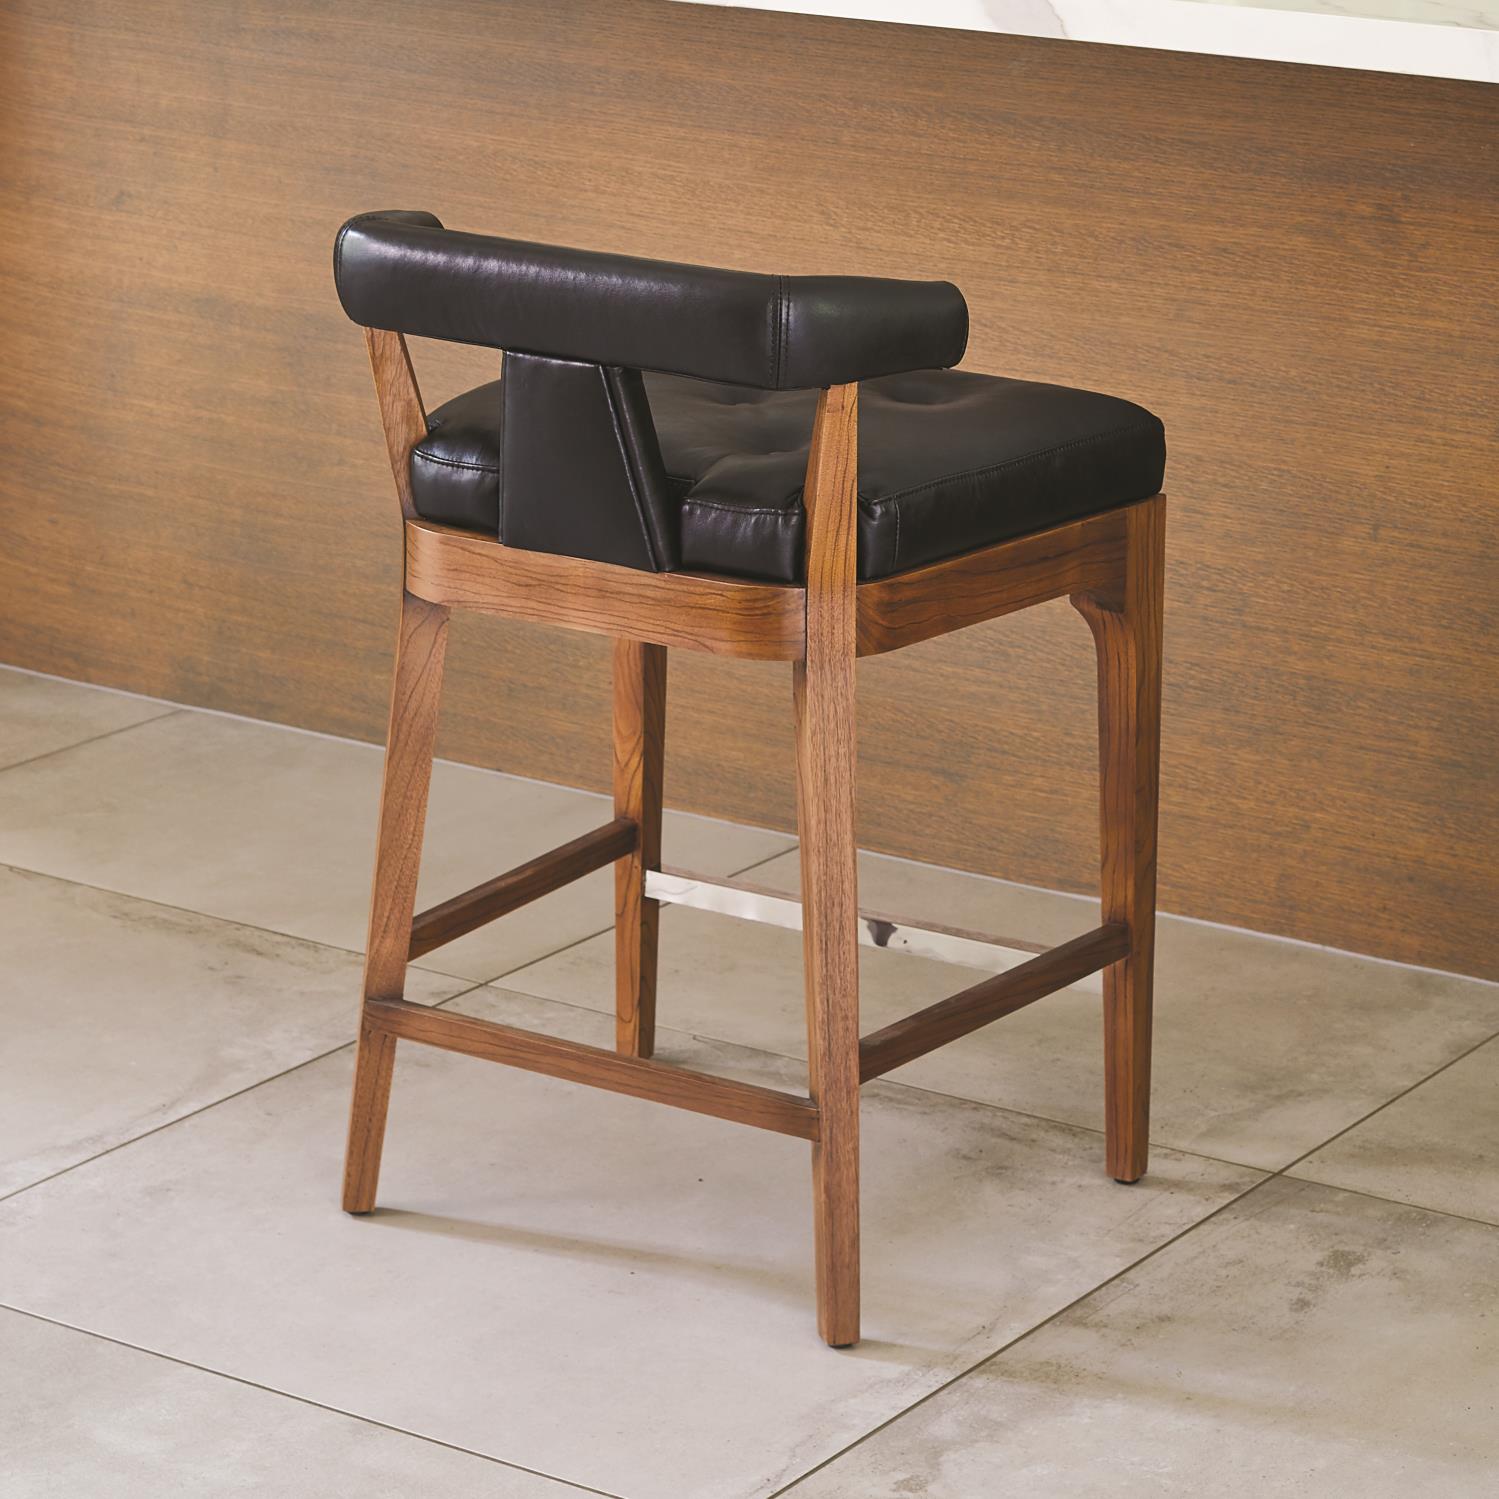 Moderno Counter Stool - Black Marble Leather - Grats Decor Interior Design & Build Inc.